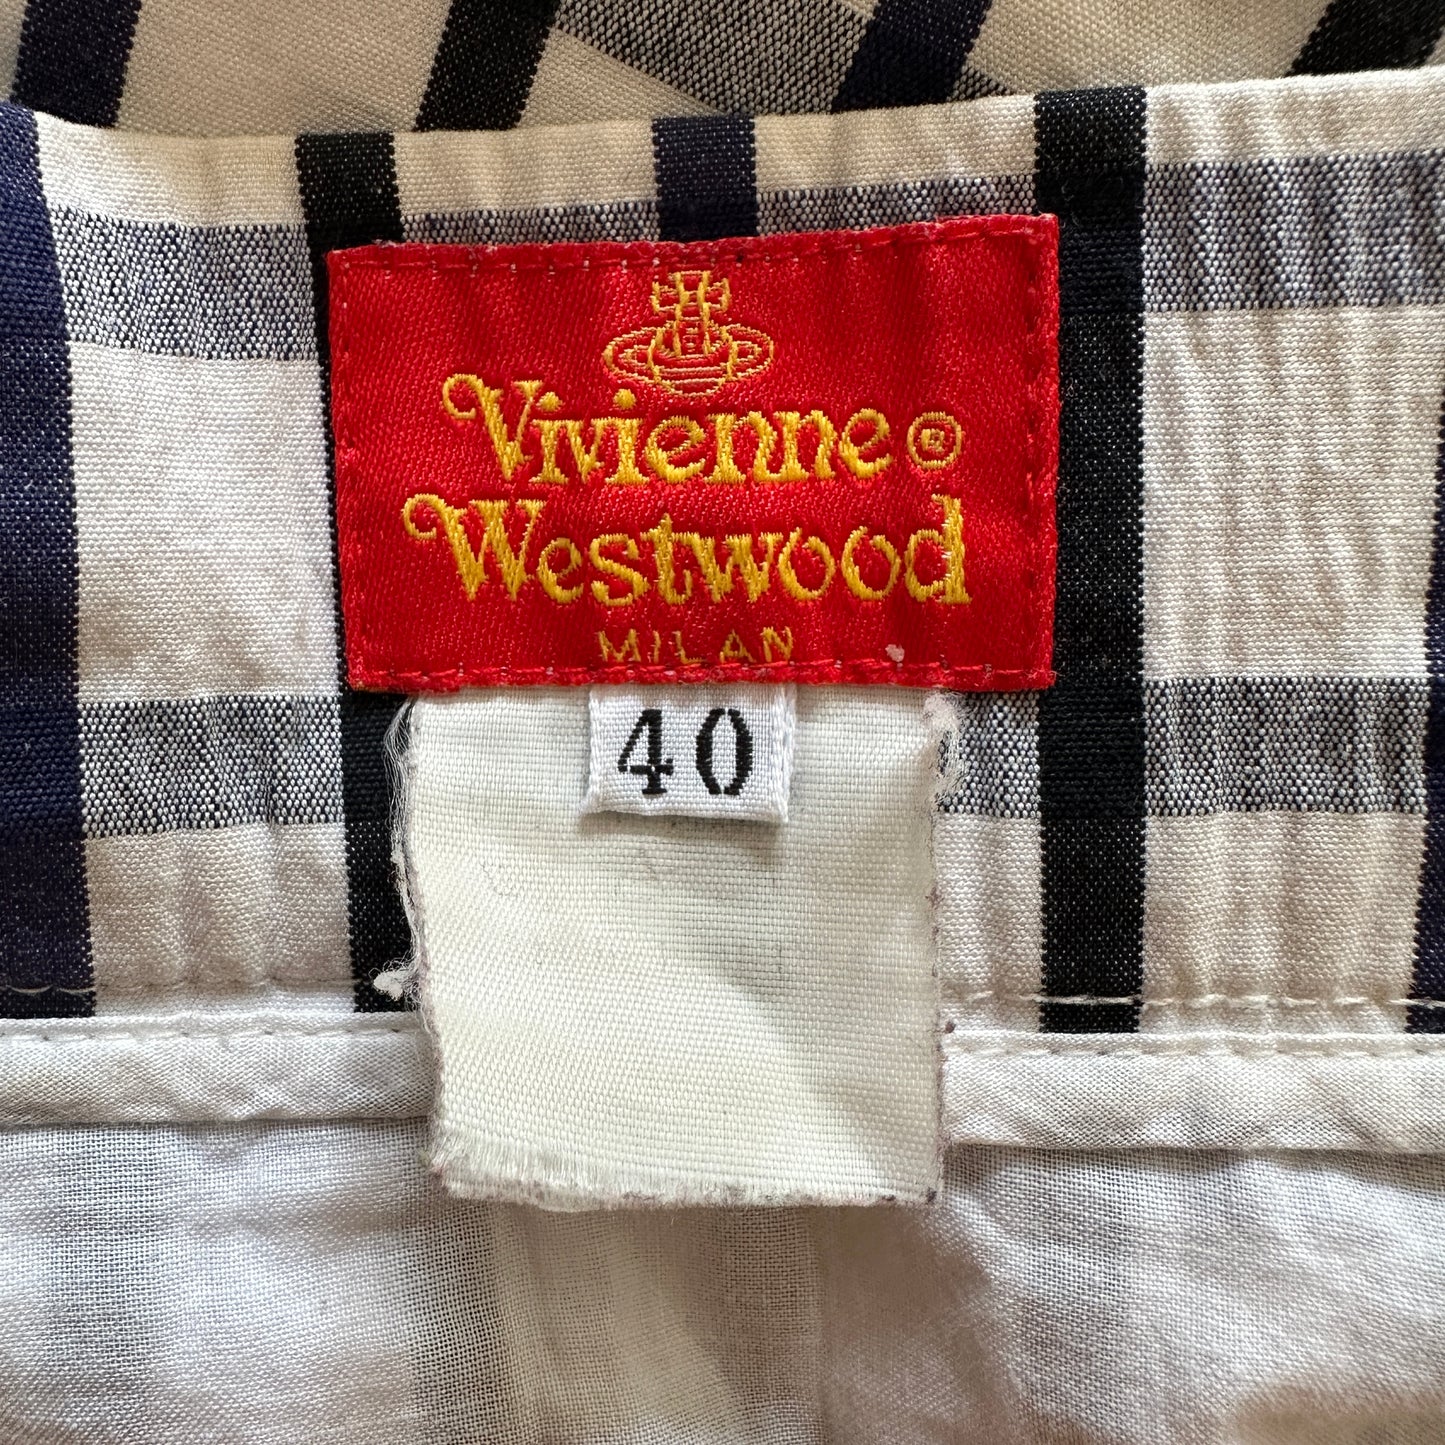 Vivienne Westwood White & Navy Checked Mini Skirt